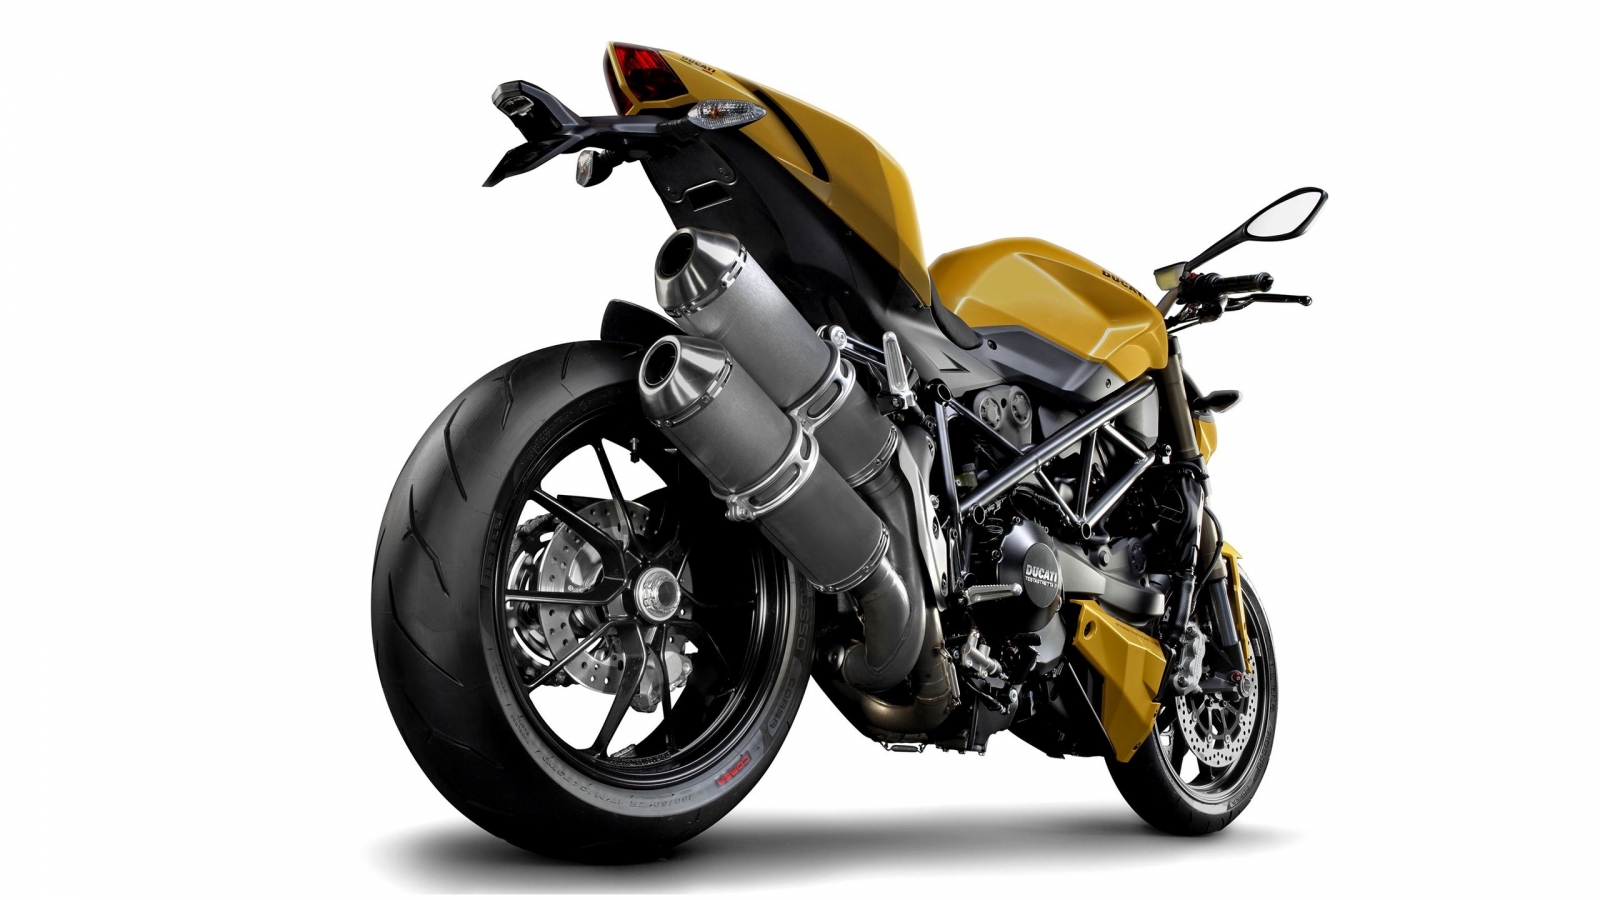  Ducati Streetfighter Rear for 1600 x 900 HDTV resolution